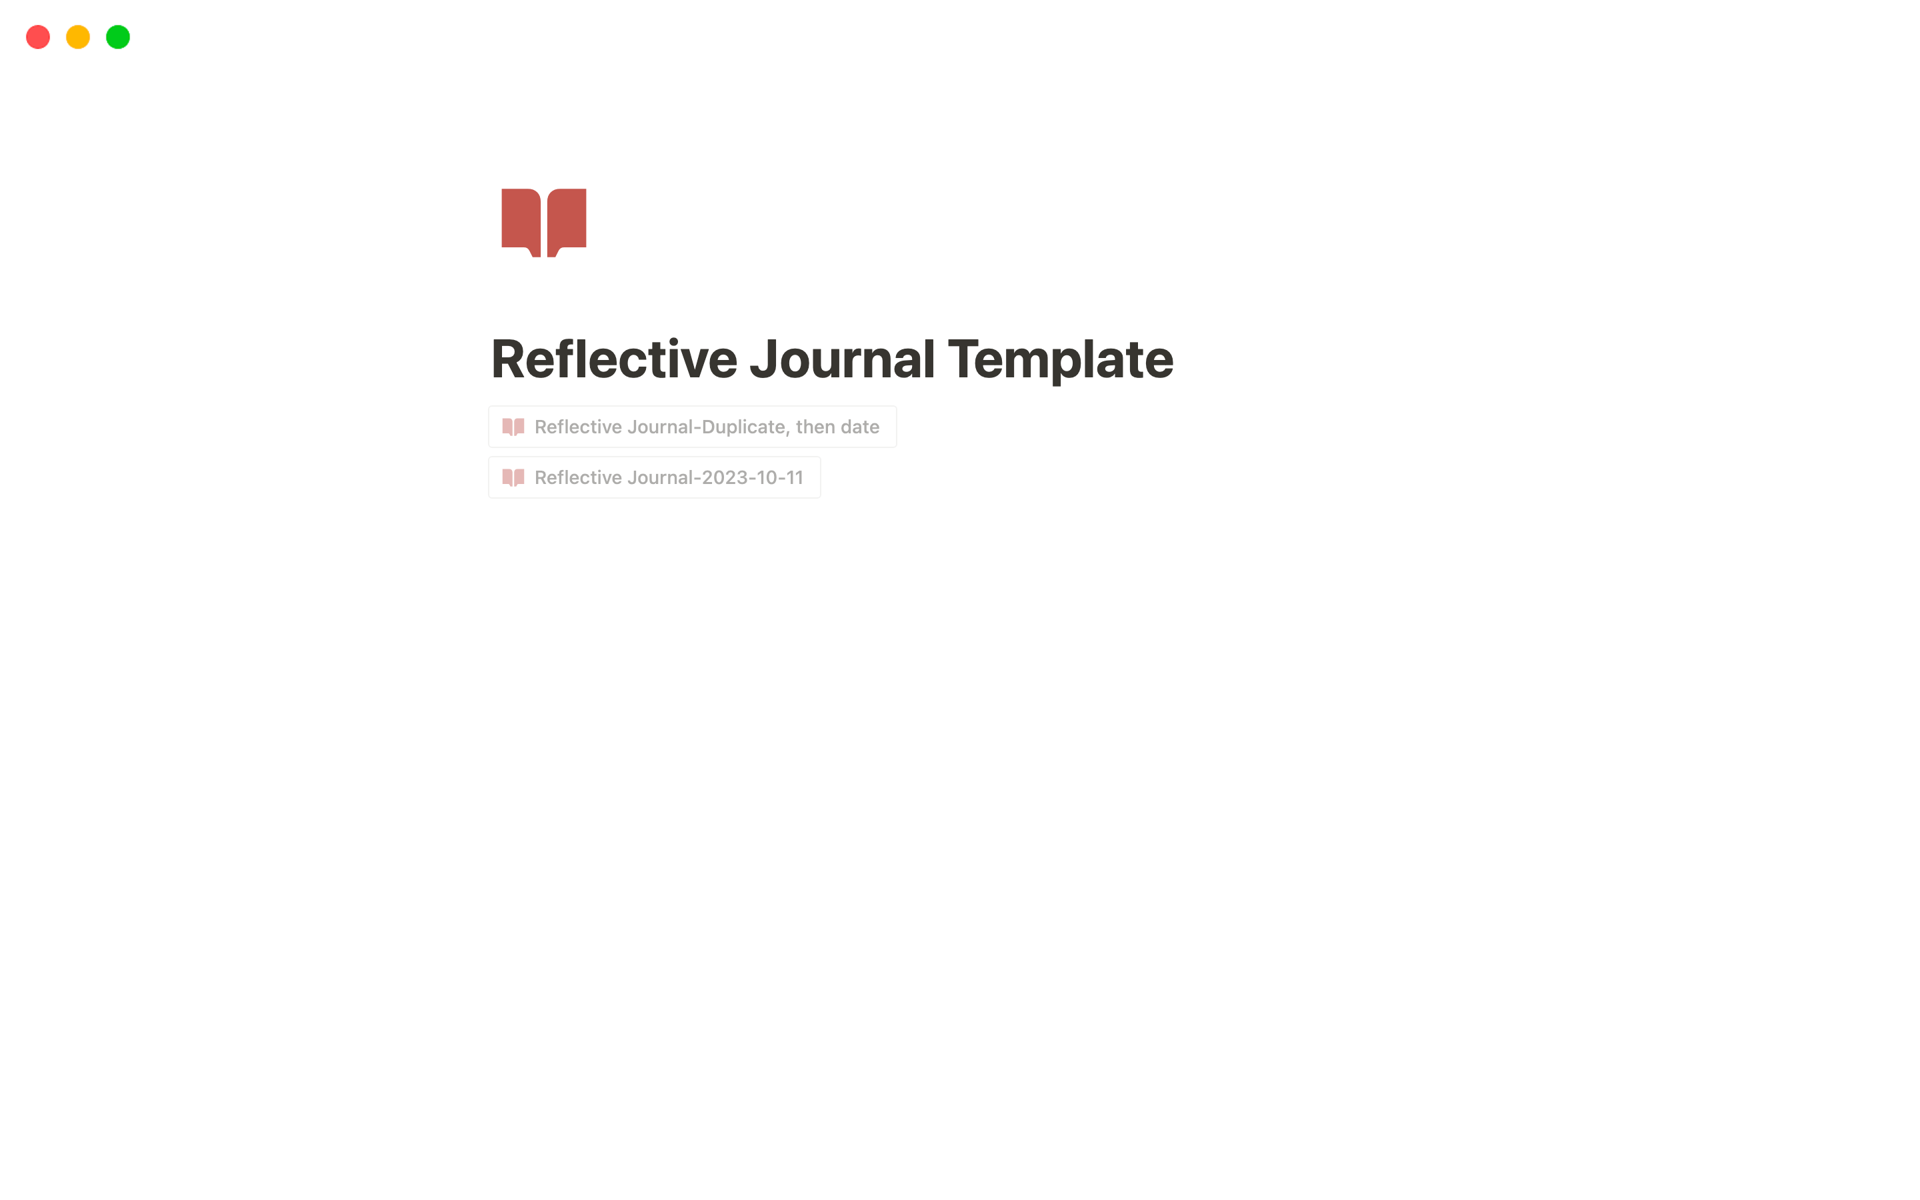 Mallin esikatselu nimelle Reflective Journal Template